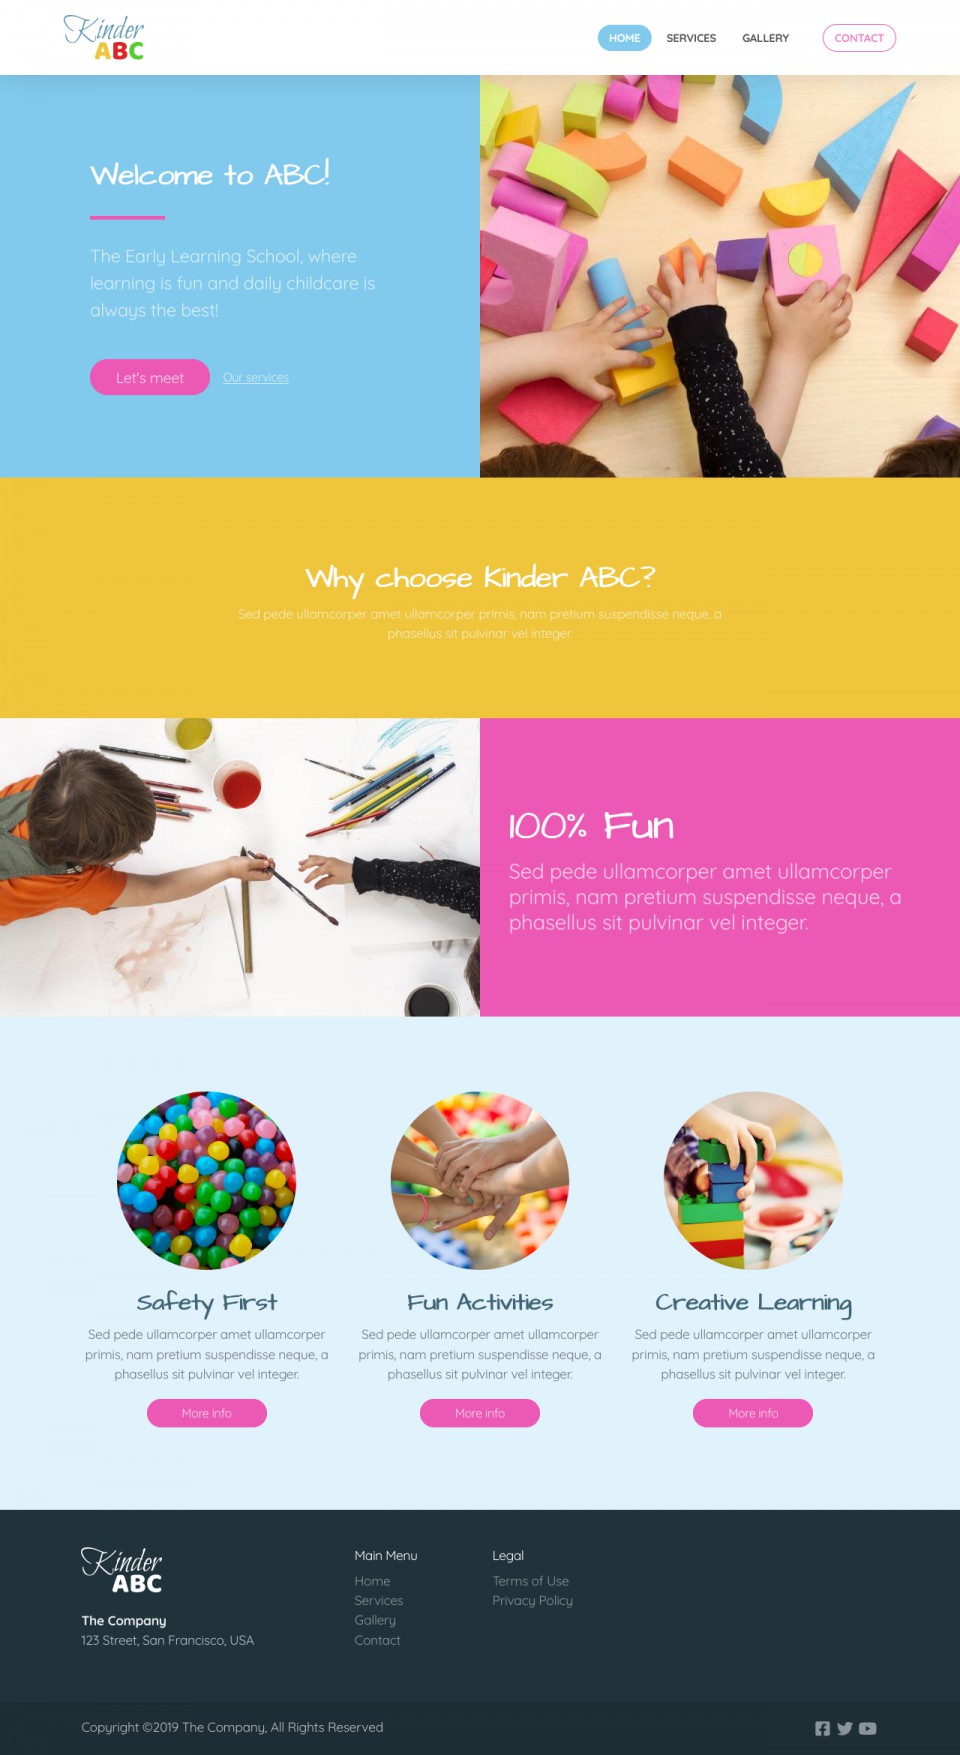 Kinder Website Template - Ideal for schools, kindergartens, education centers, child-focused businesses